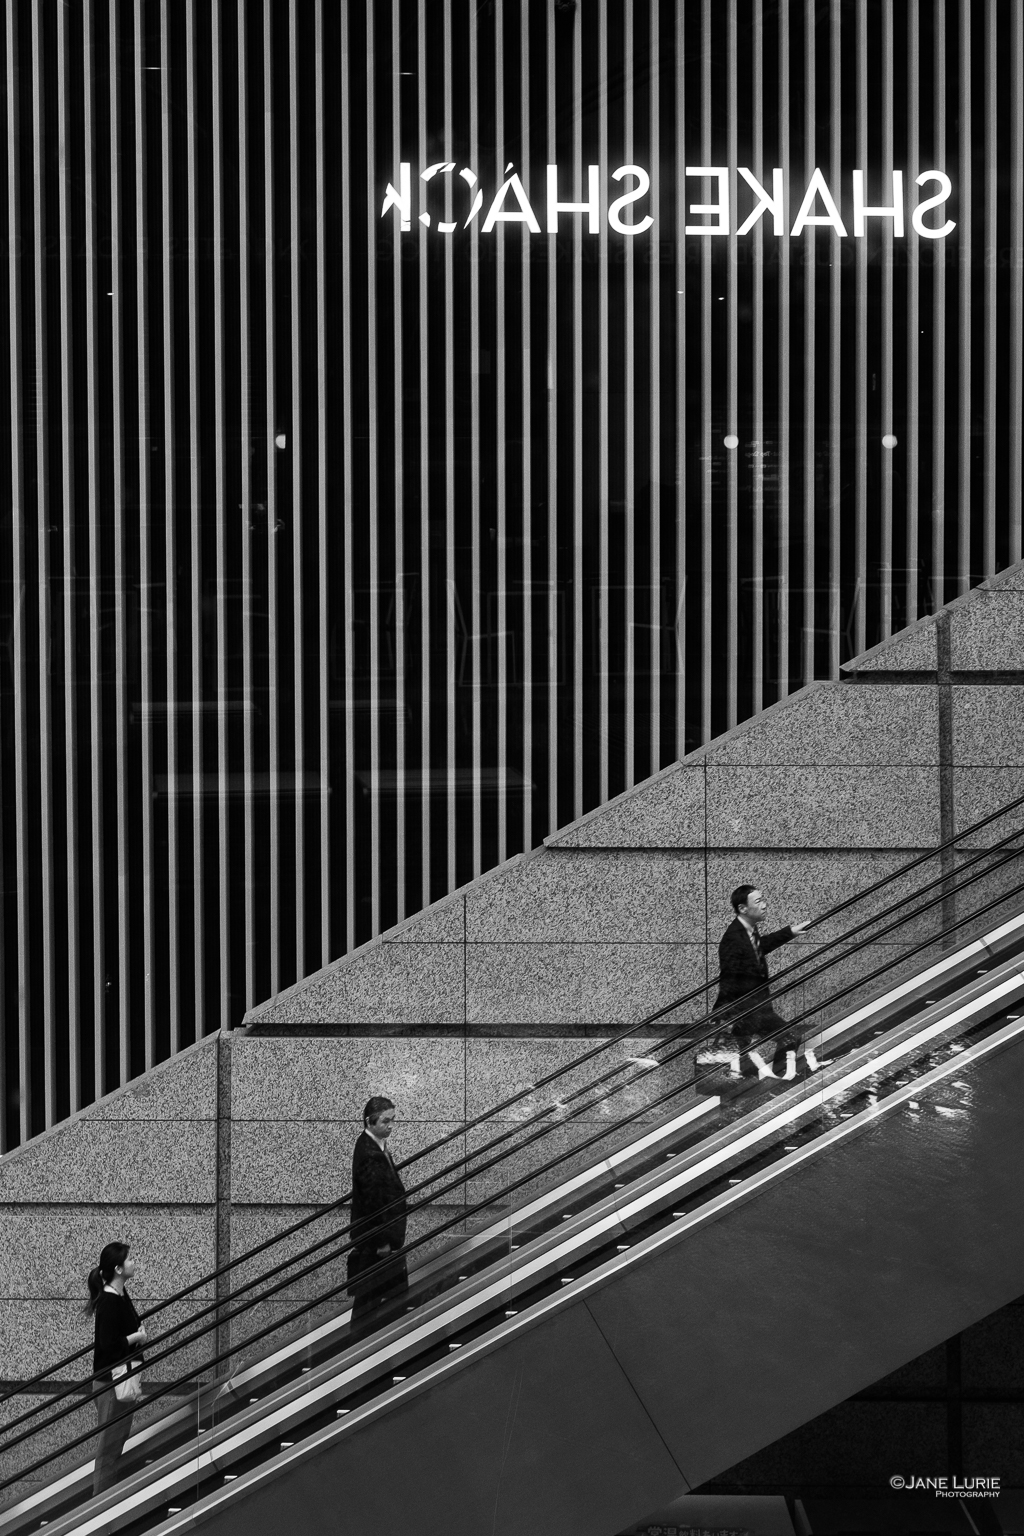 FujifilmX-T2, Japan, Photography, Black and White, Monochrome, City, Tokyo, Kyoto, Street, Portrait, Lines, Shadows